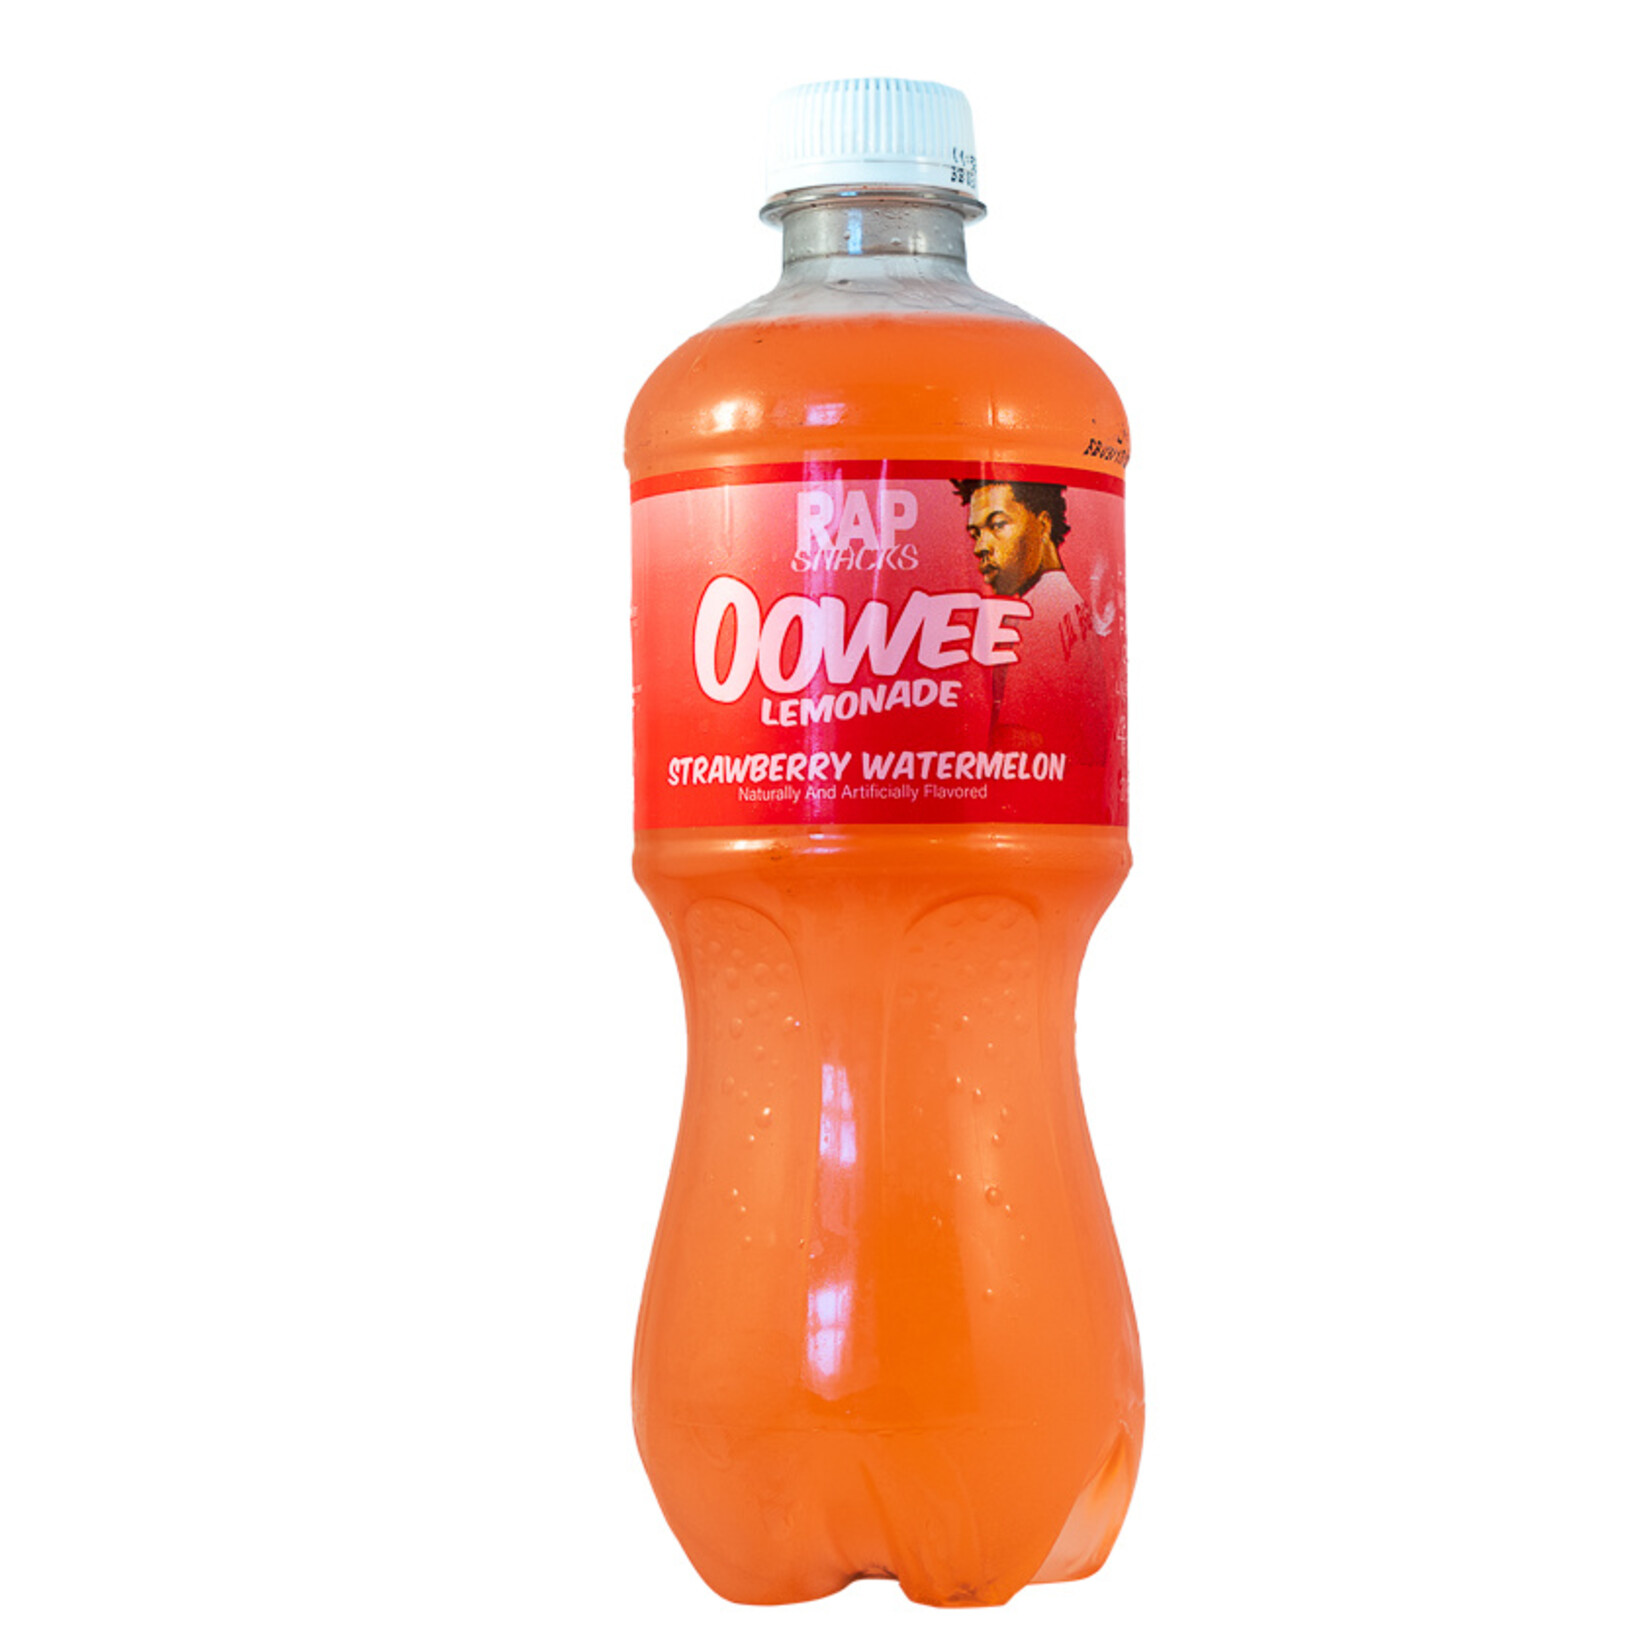 RAP snaks Oowee limonade fraise melon d'eau 600ml